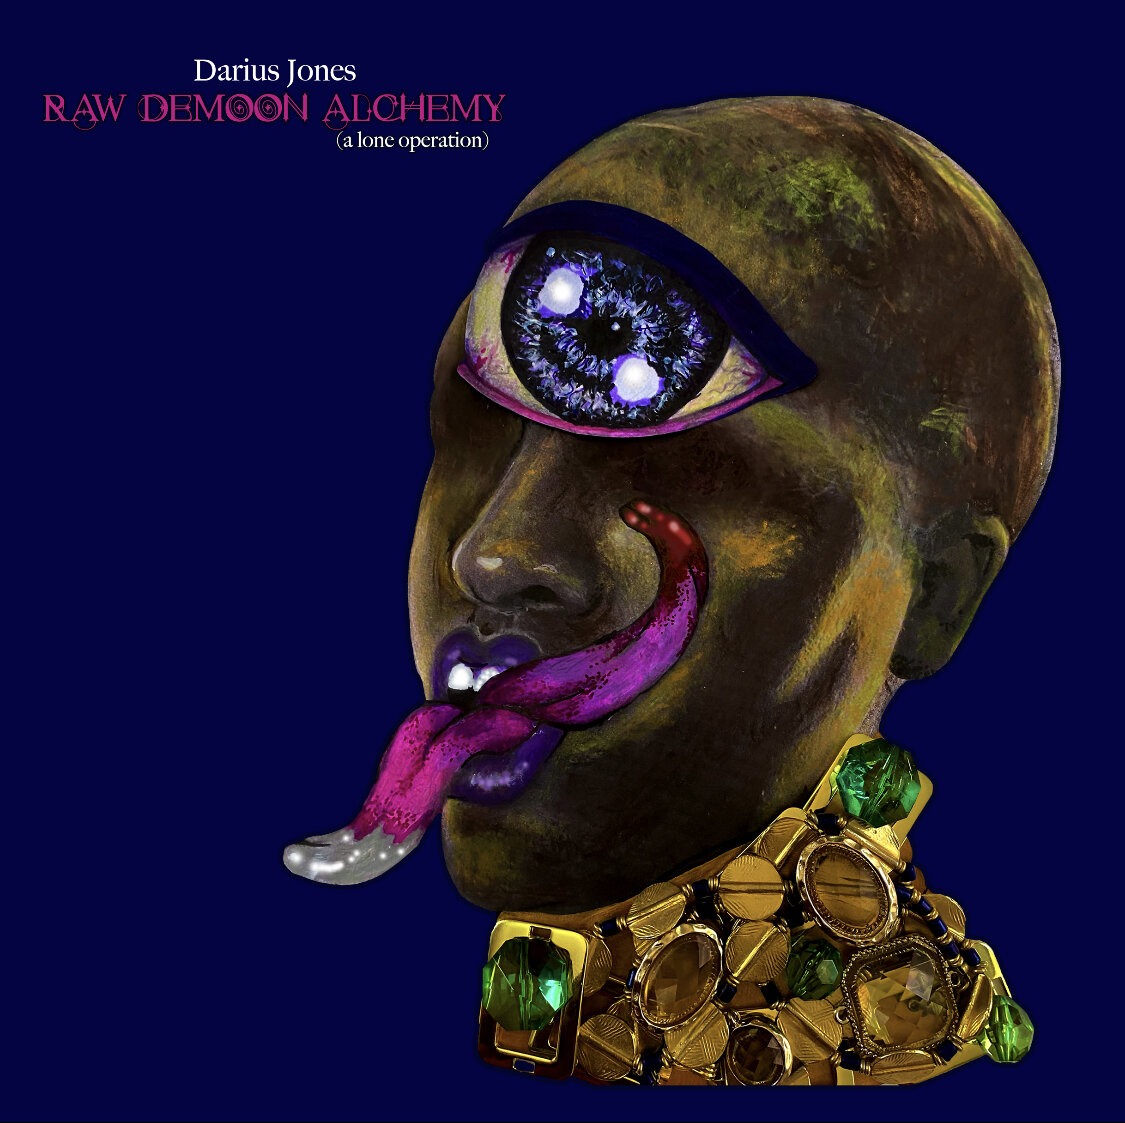 Album Cover for Darius Jones' "Raw Demoon Alchemy (a lone operation)", 2021